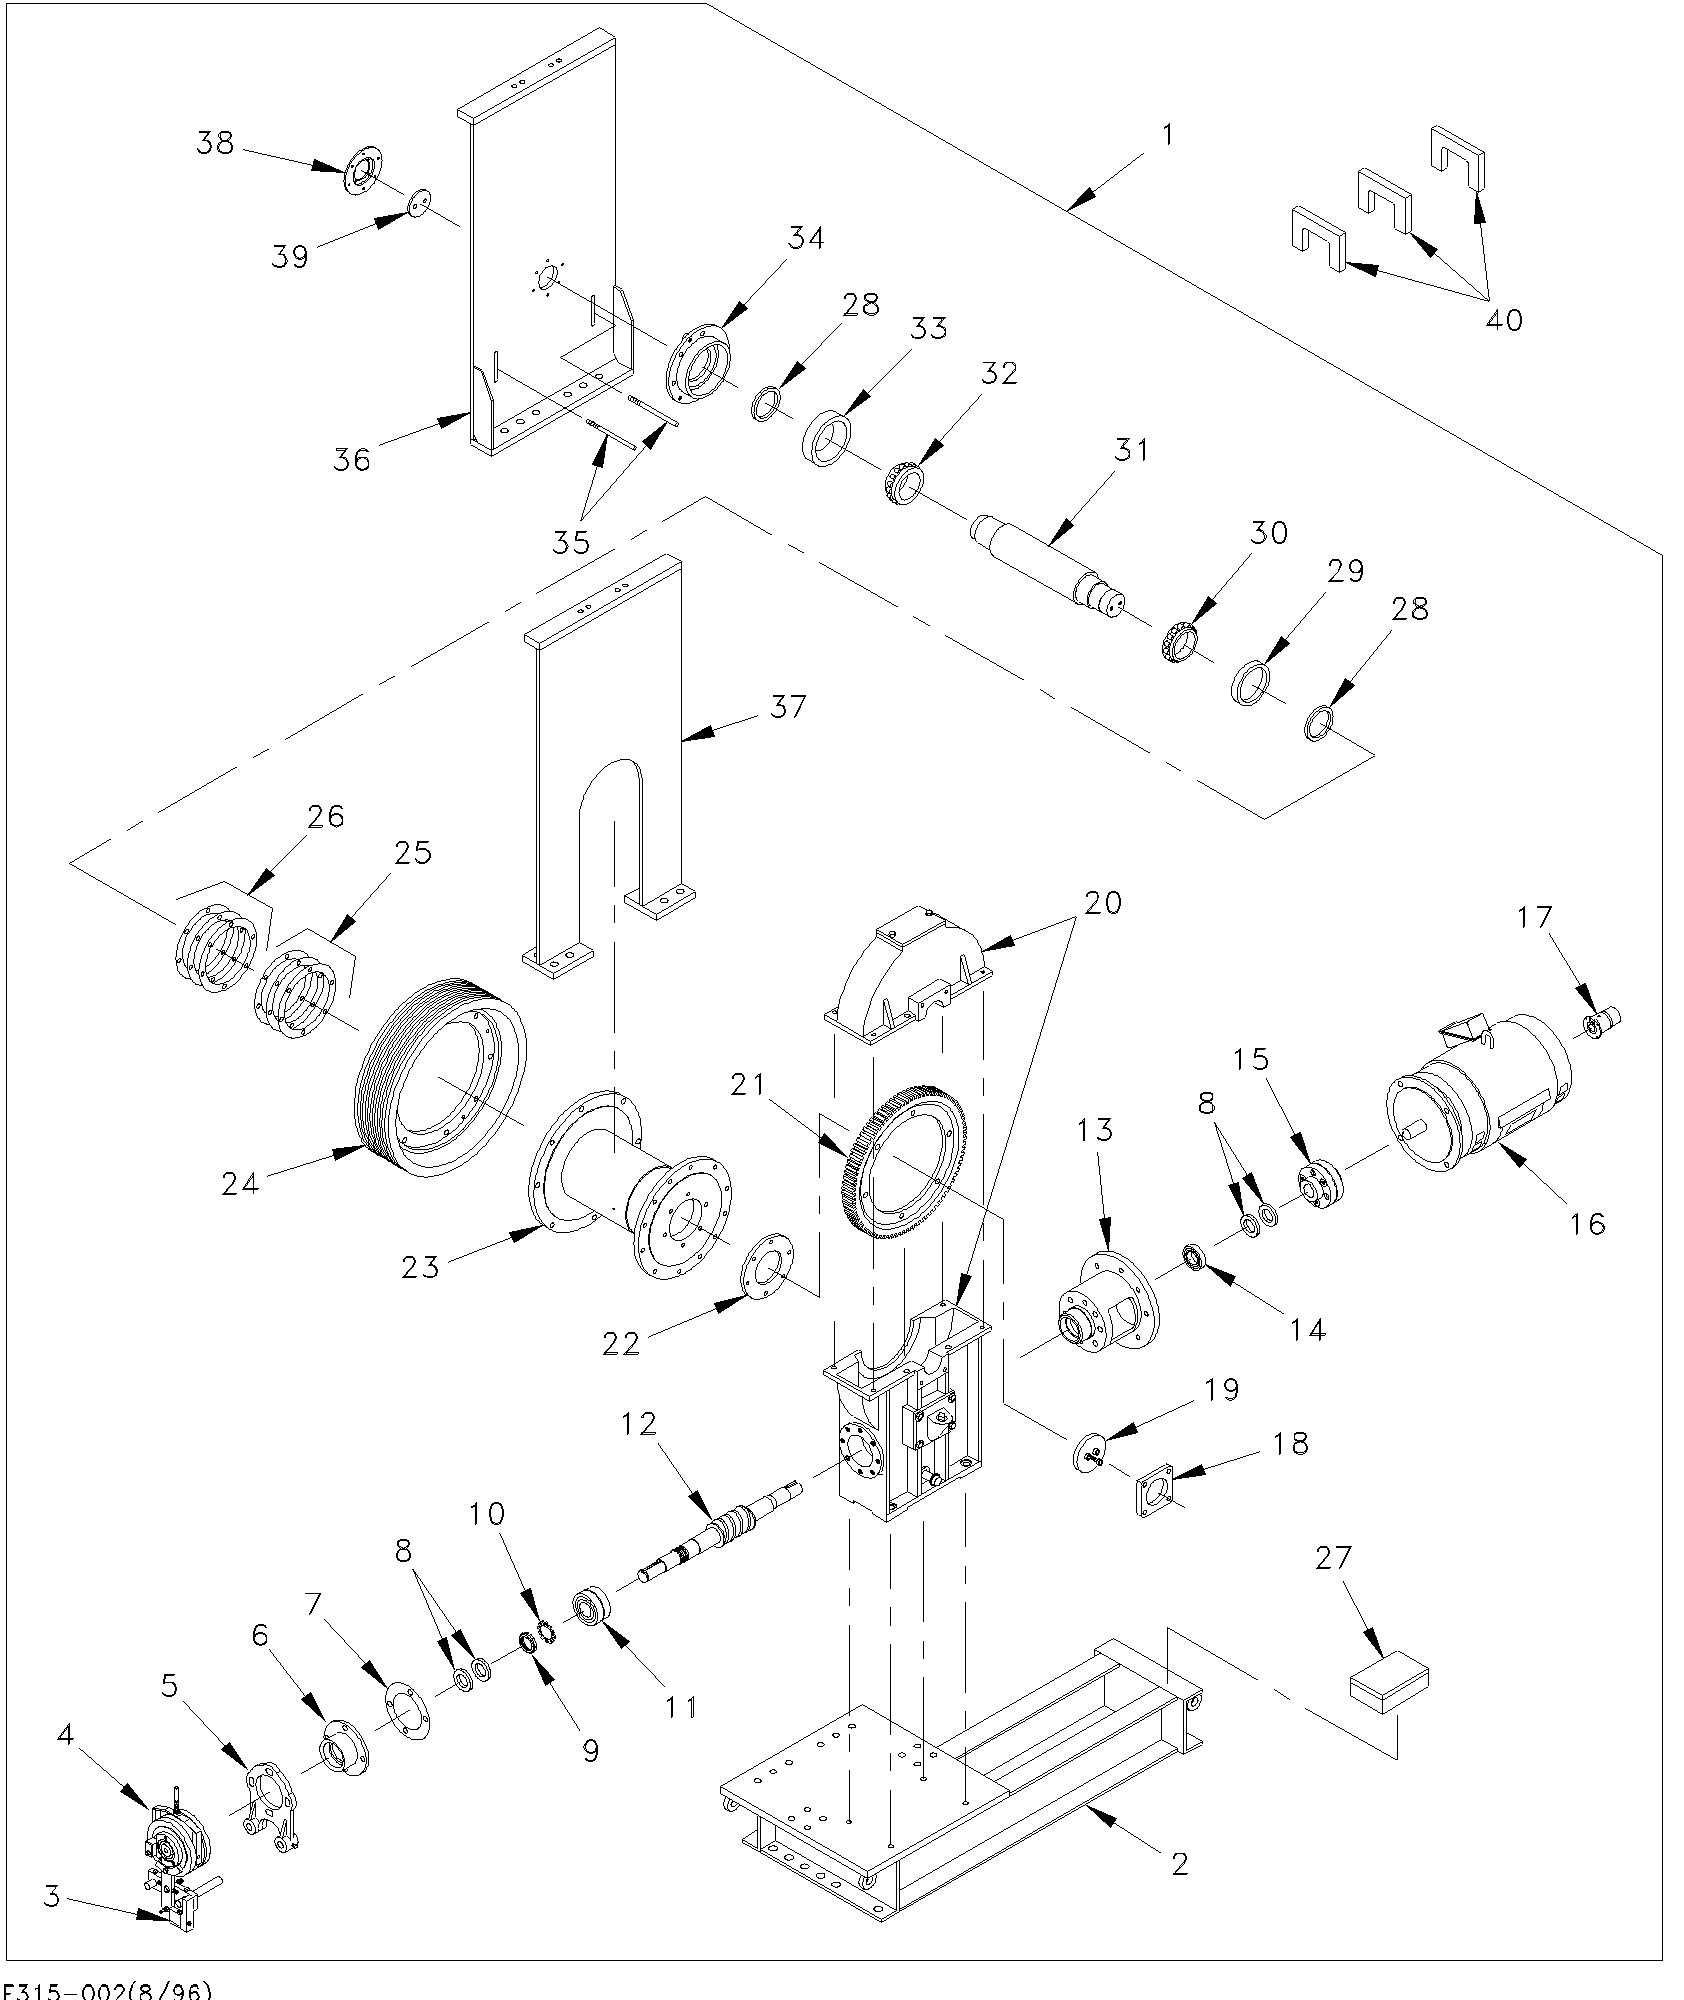 Disc Brake assembly Diagram assembly Details Of Disc Brake assembly Diagram